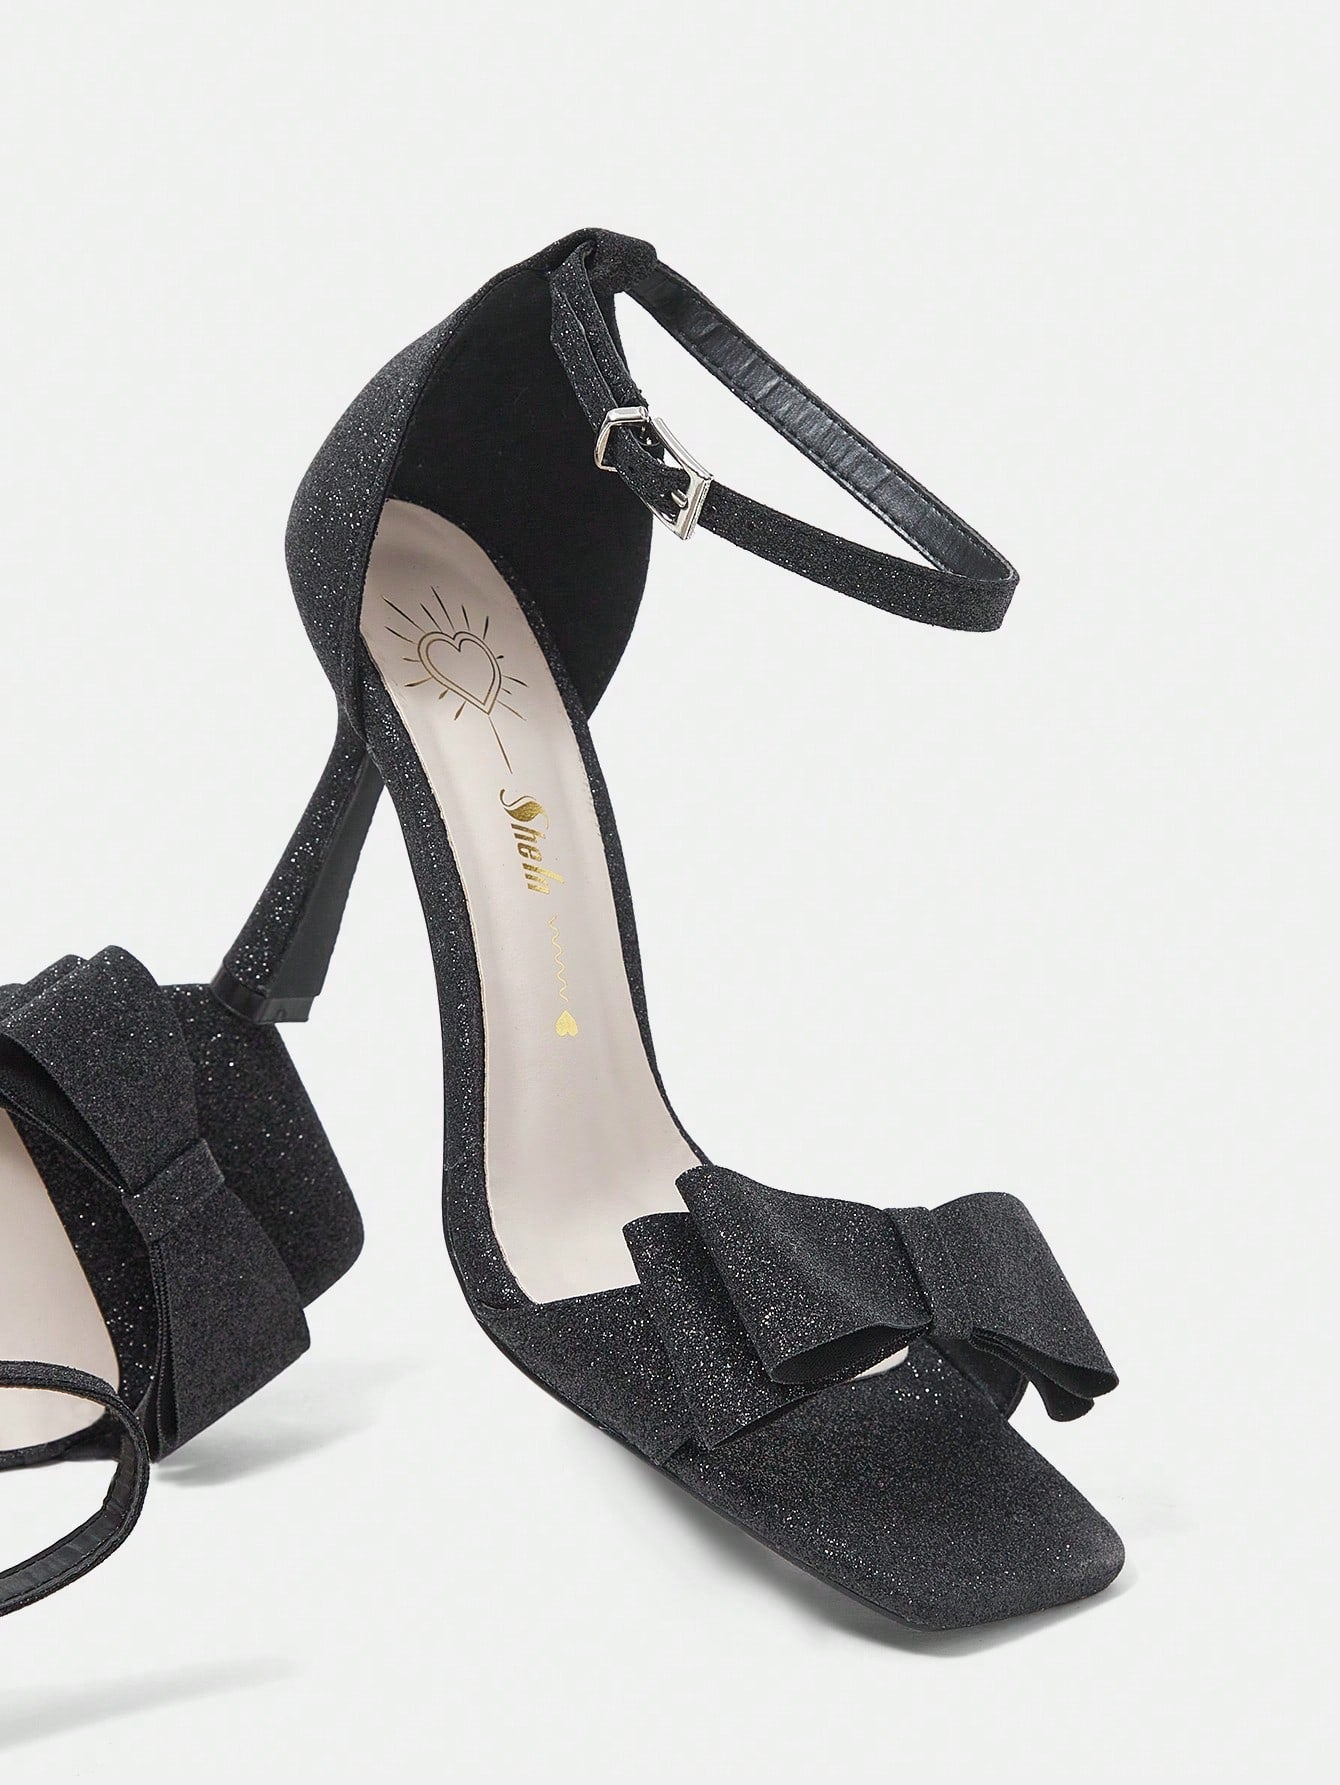 Ladies' Fashionable Black High-Heeled Sandals